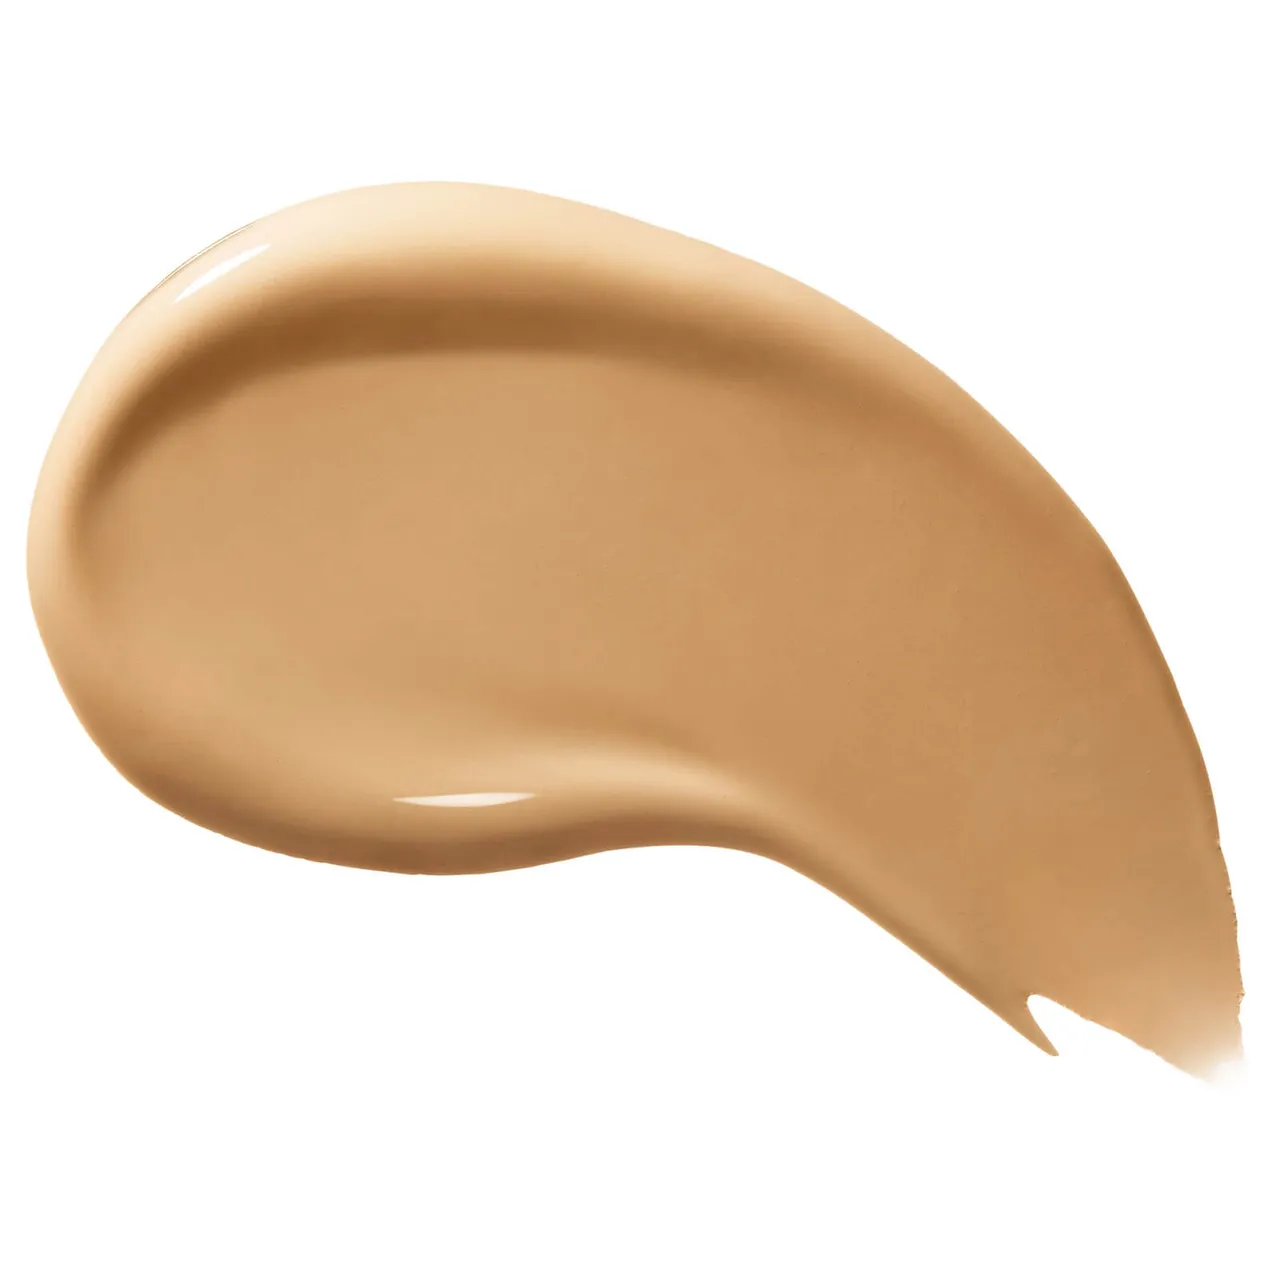 Shiseido Synchro Skin Radiant Lifting SPF30 Foundation 30ml (Various Shades) - 340 Oak